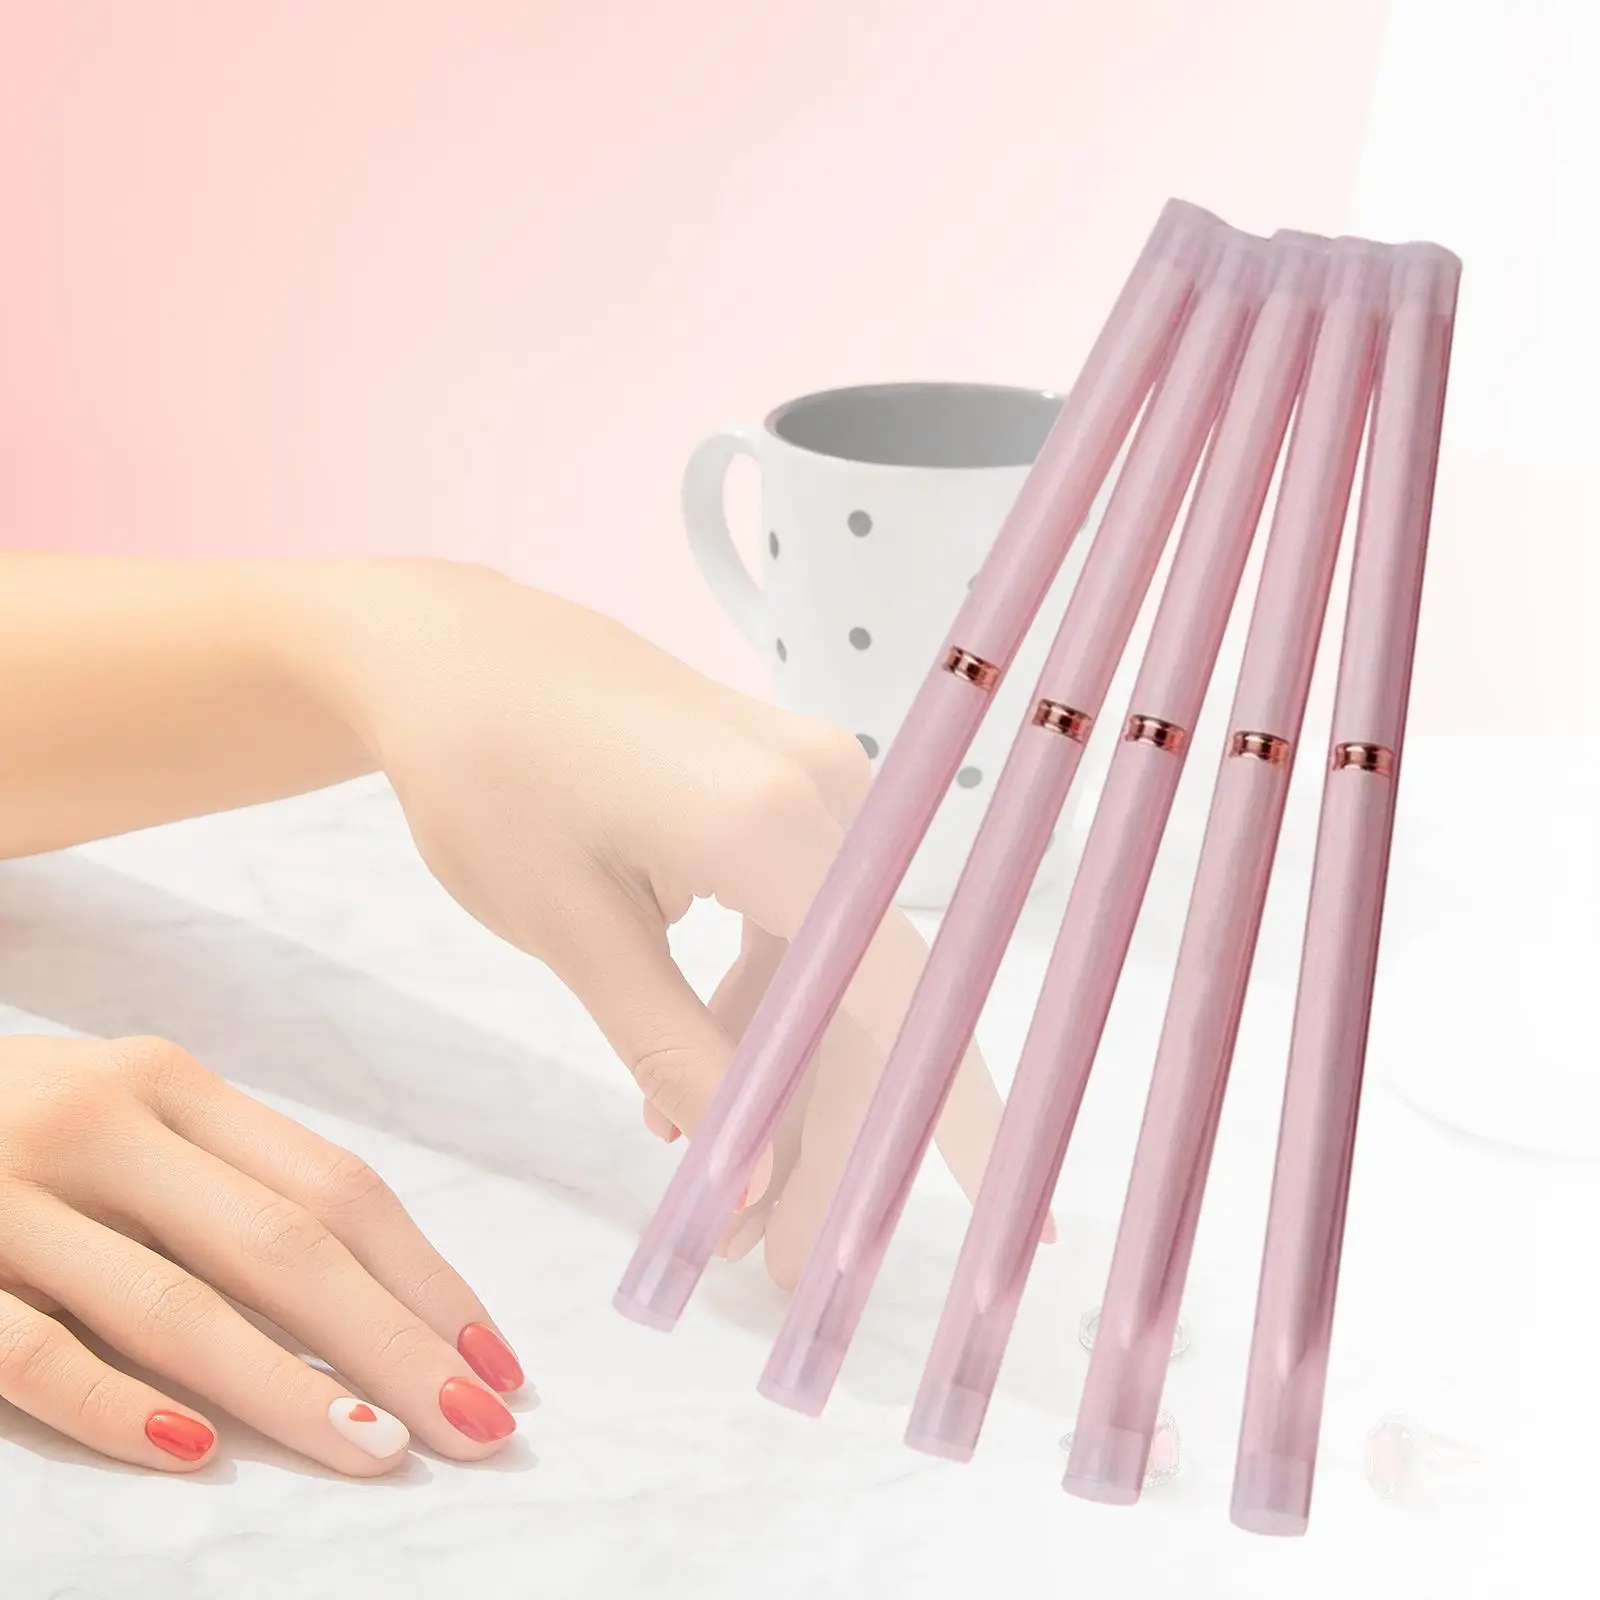 5 Pieces Nail Art Brushes Kit Super Fine Striper Brush Nail Art Painting Brushes for Nail Art Design DIY Professional Design